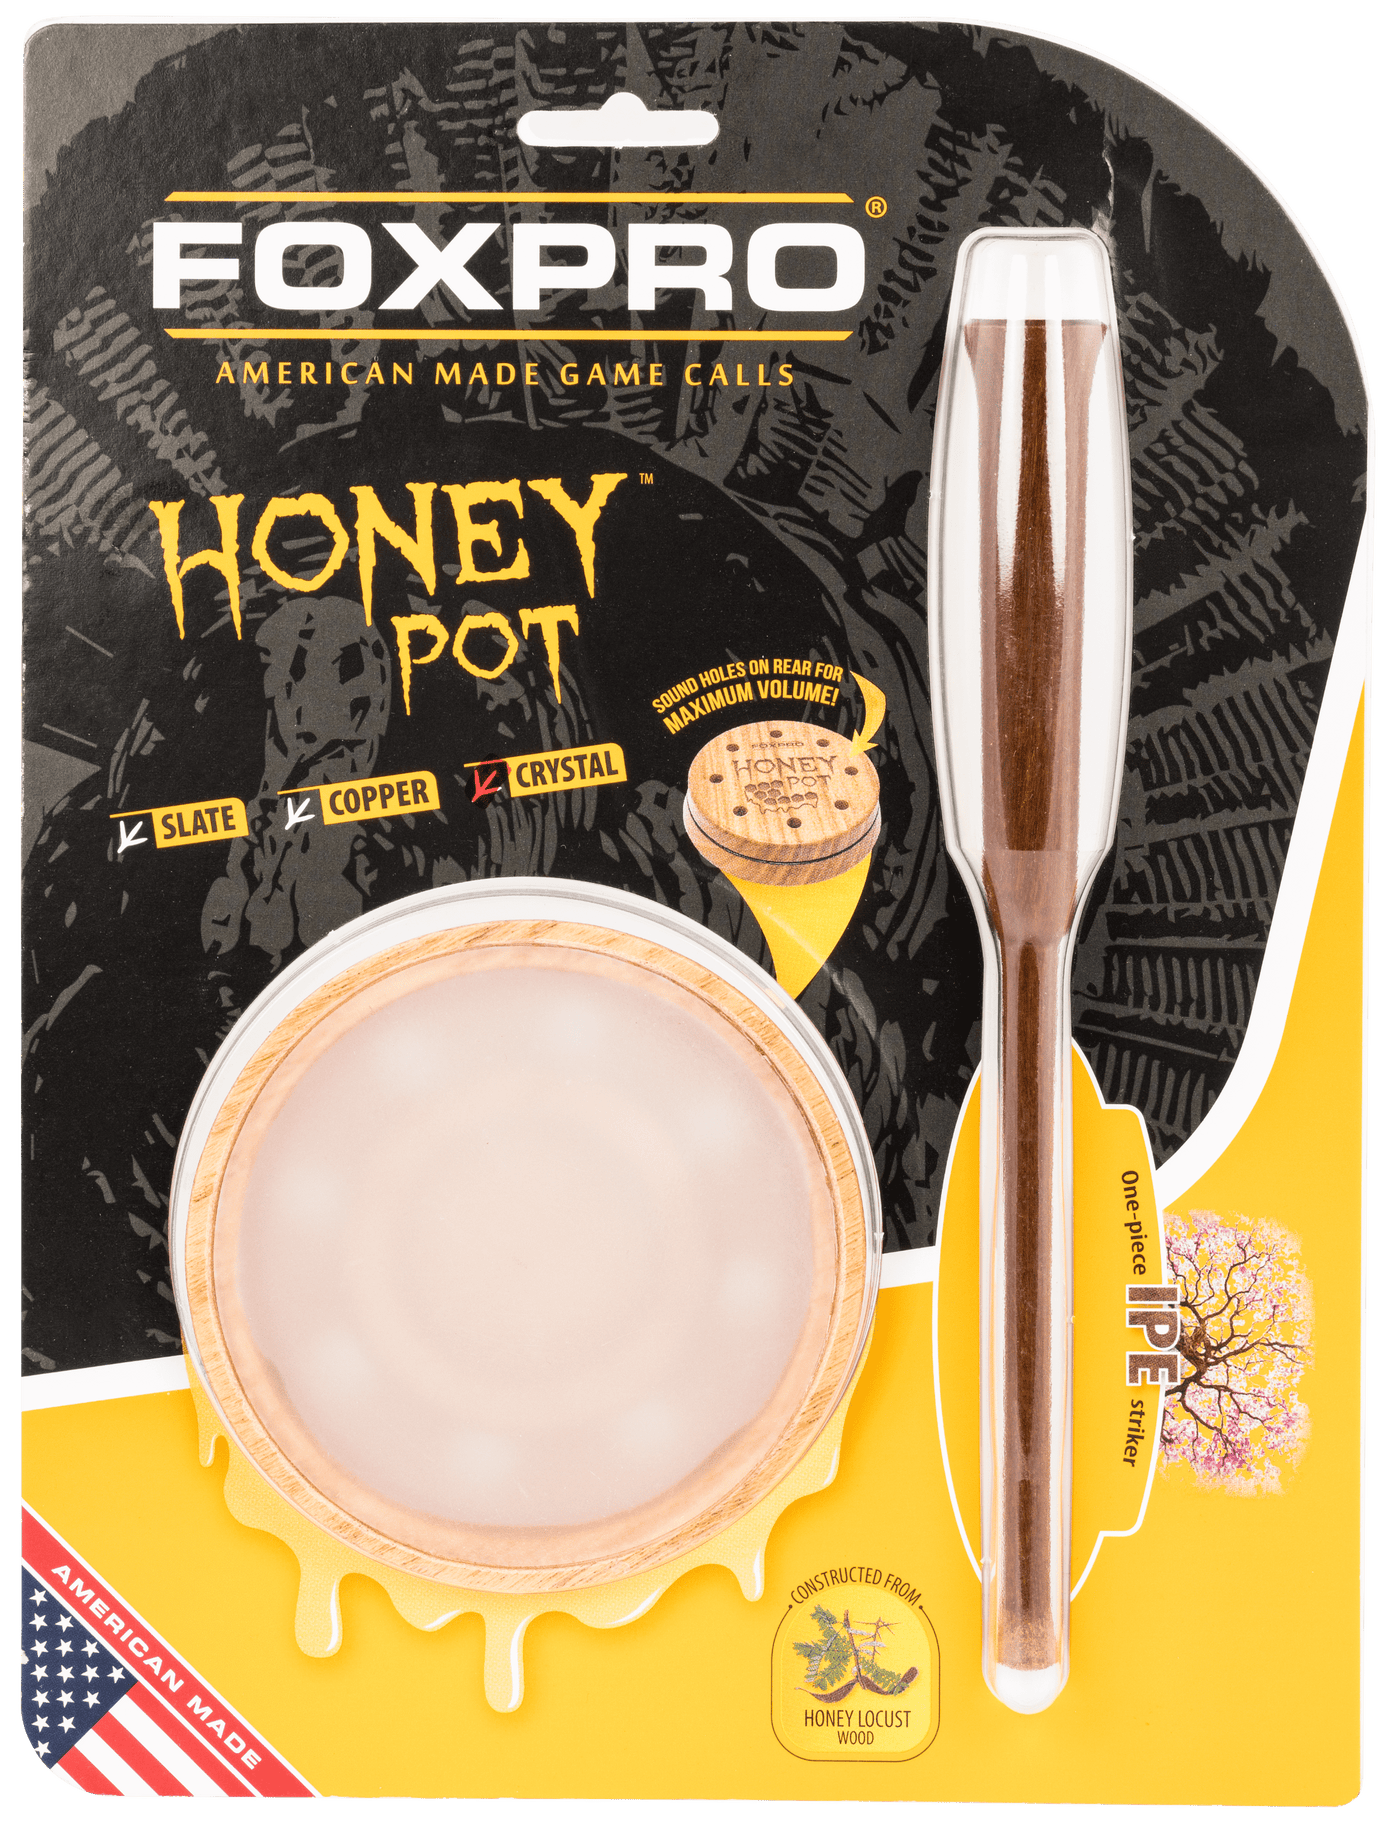 Foxpro Foxpro Honey Pot, Foxpro Hpcrystal       Honey Pot Tky Crystal Hunting